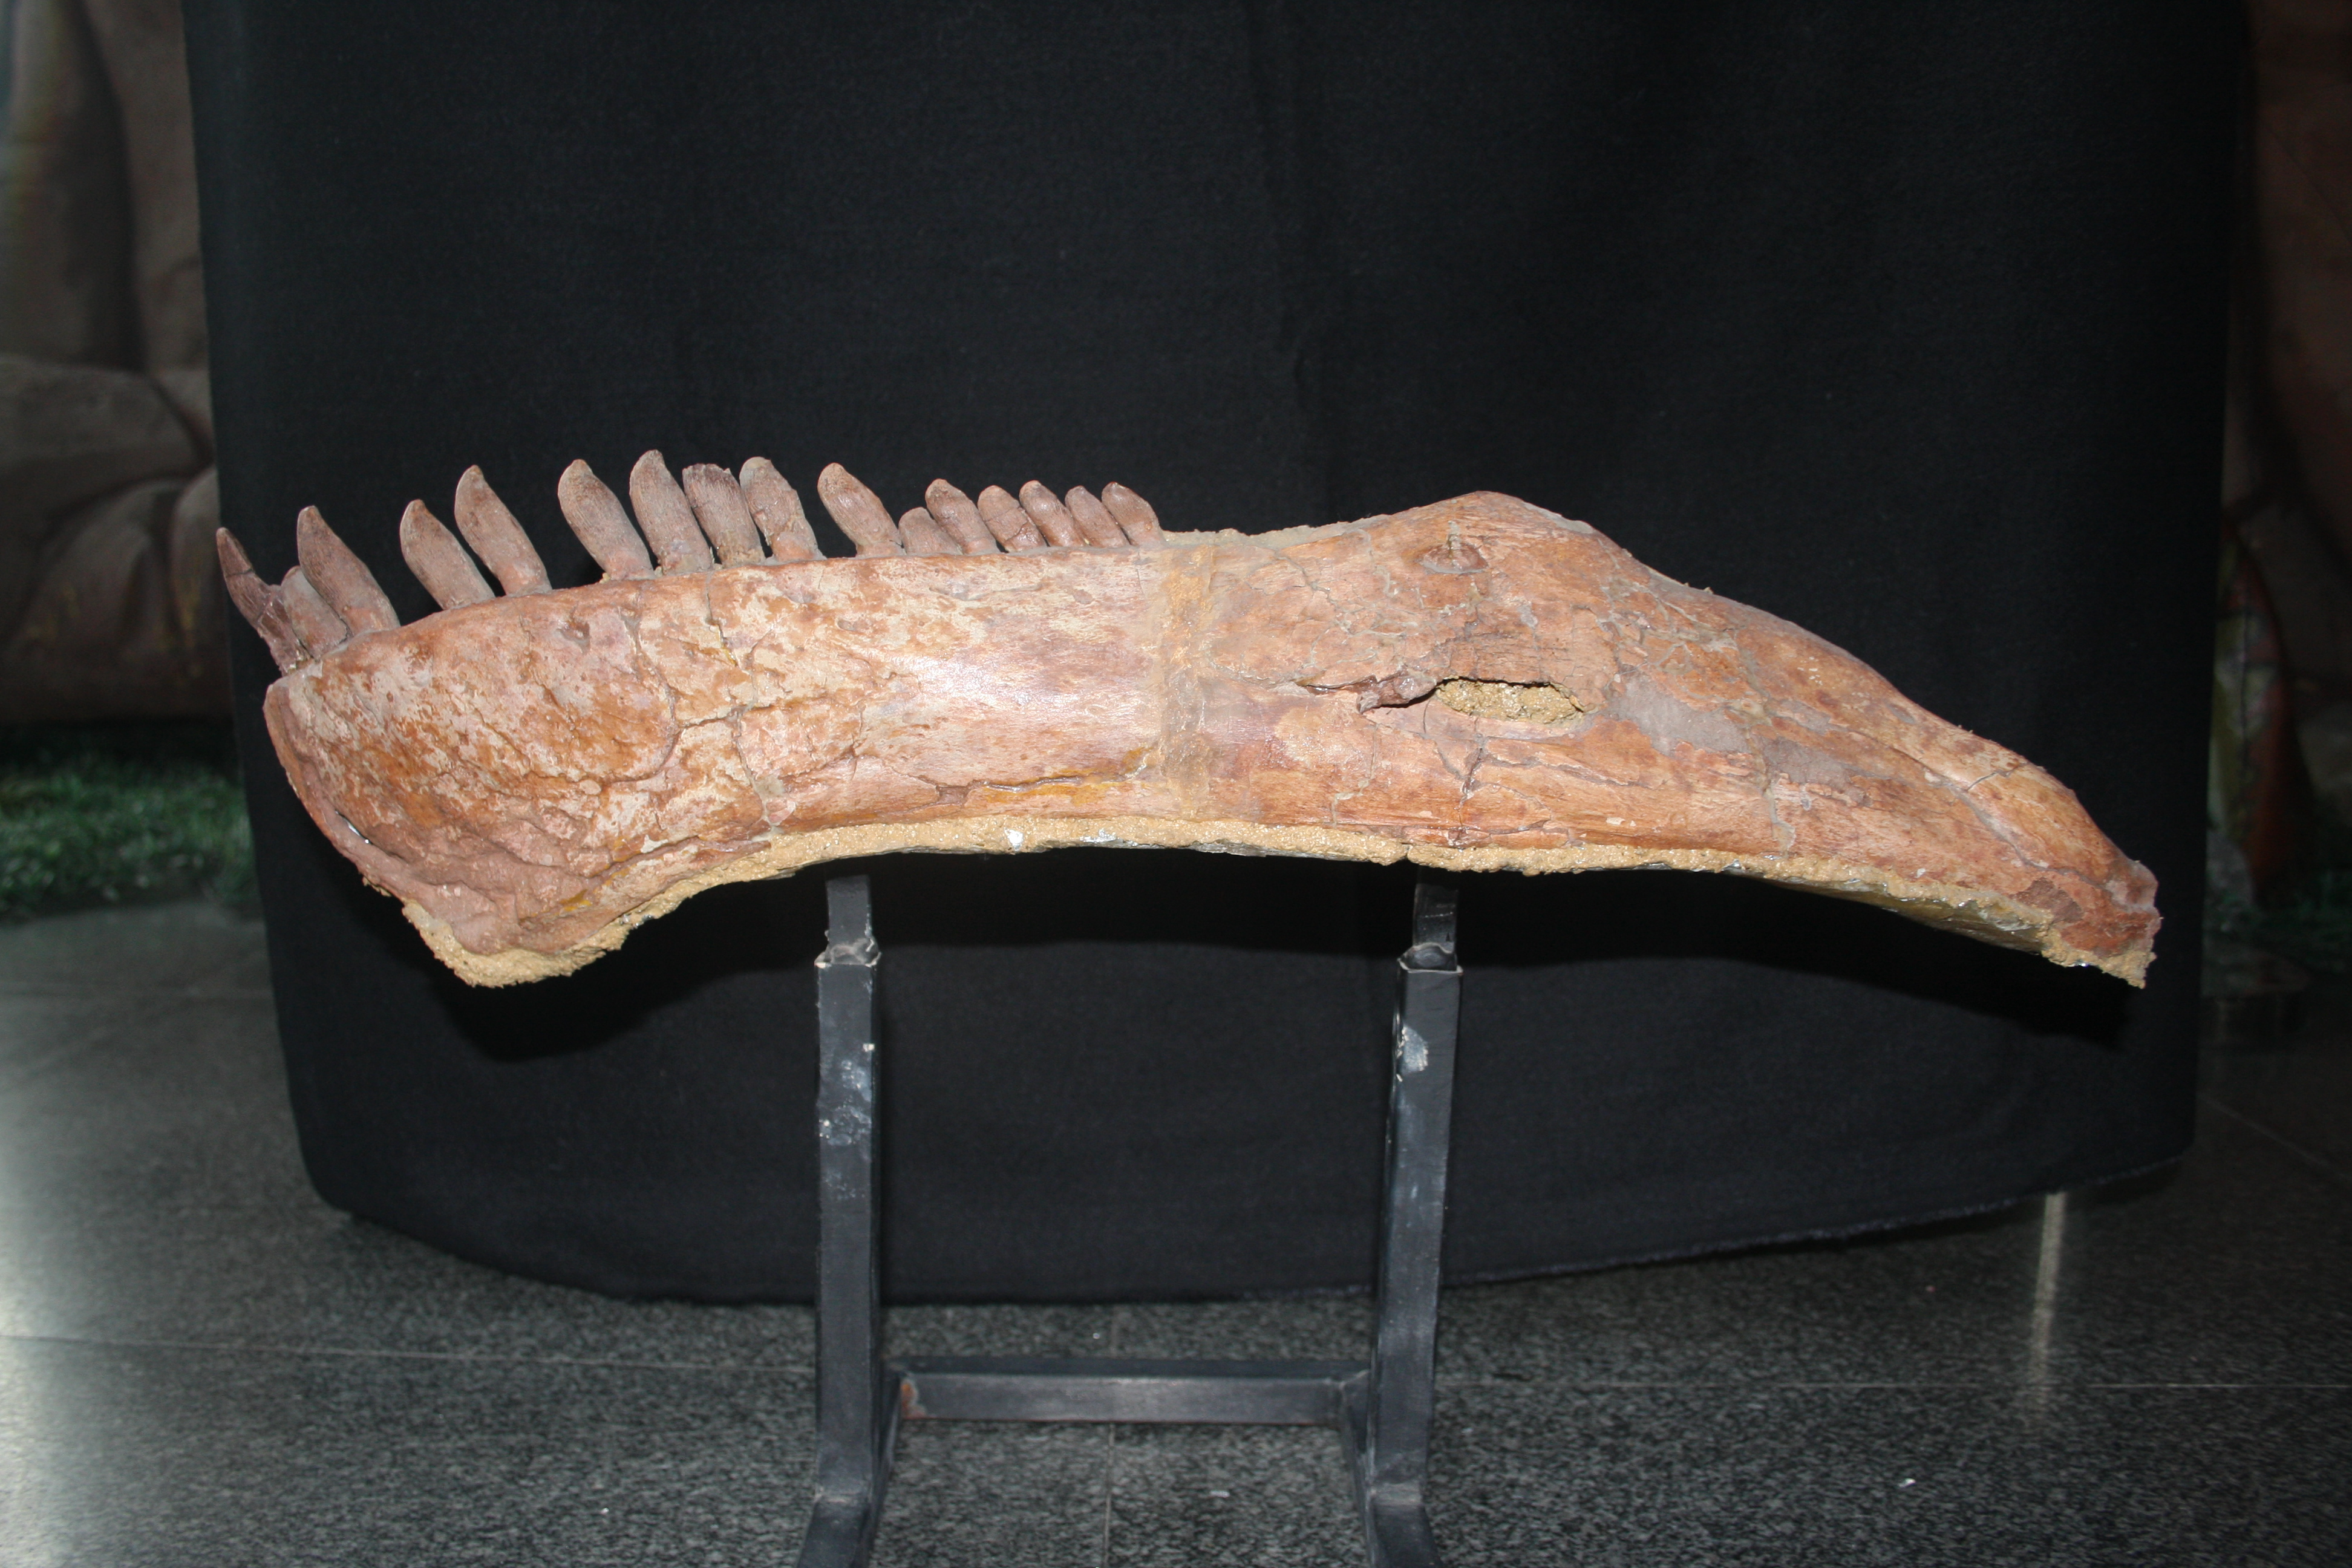 Lower jaw of Mamenchisaurus sinocanadorum and two of the vertebrae linked together